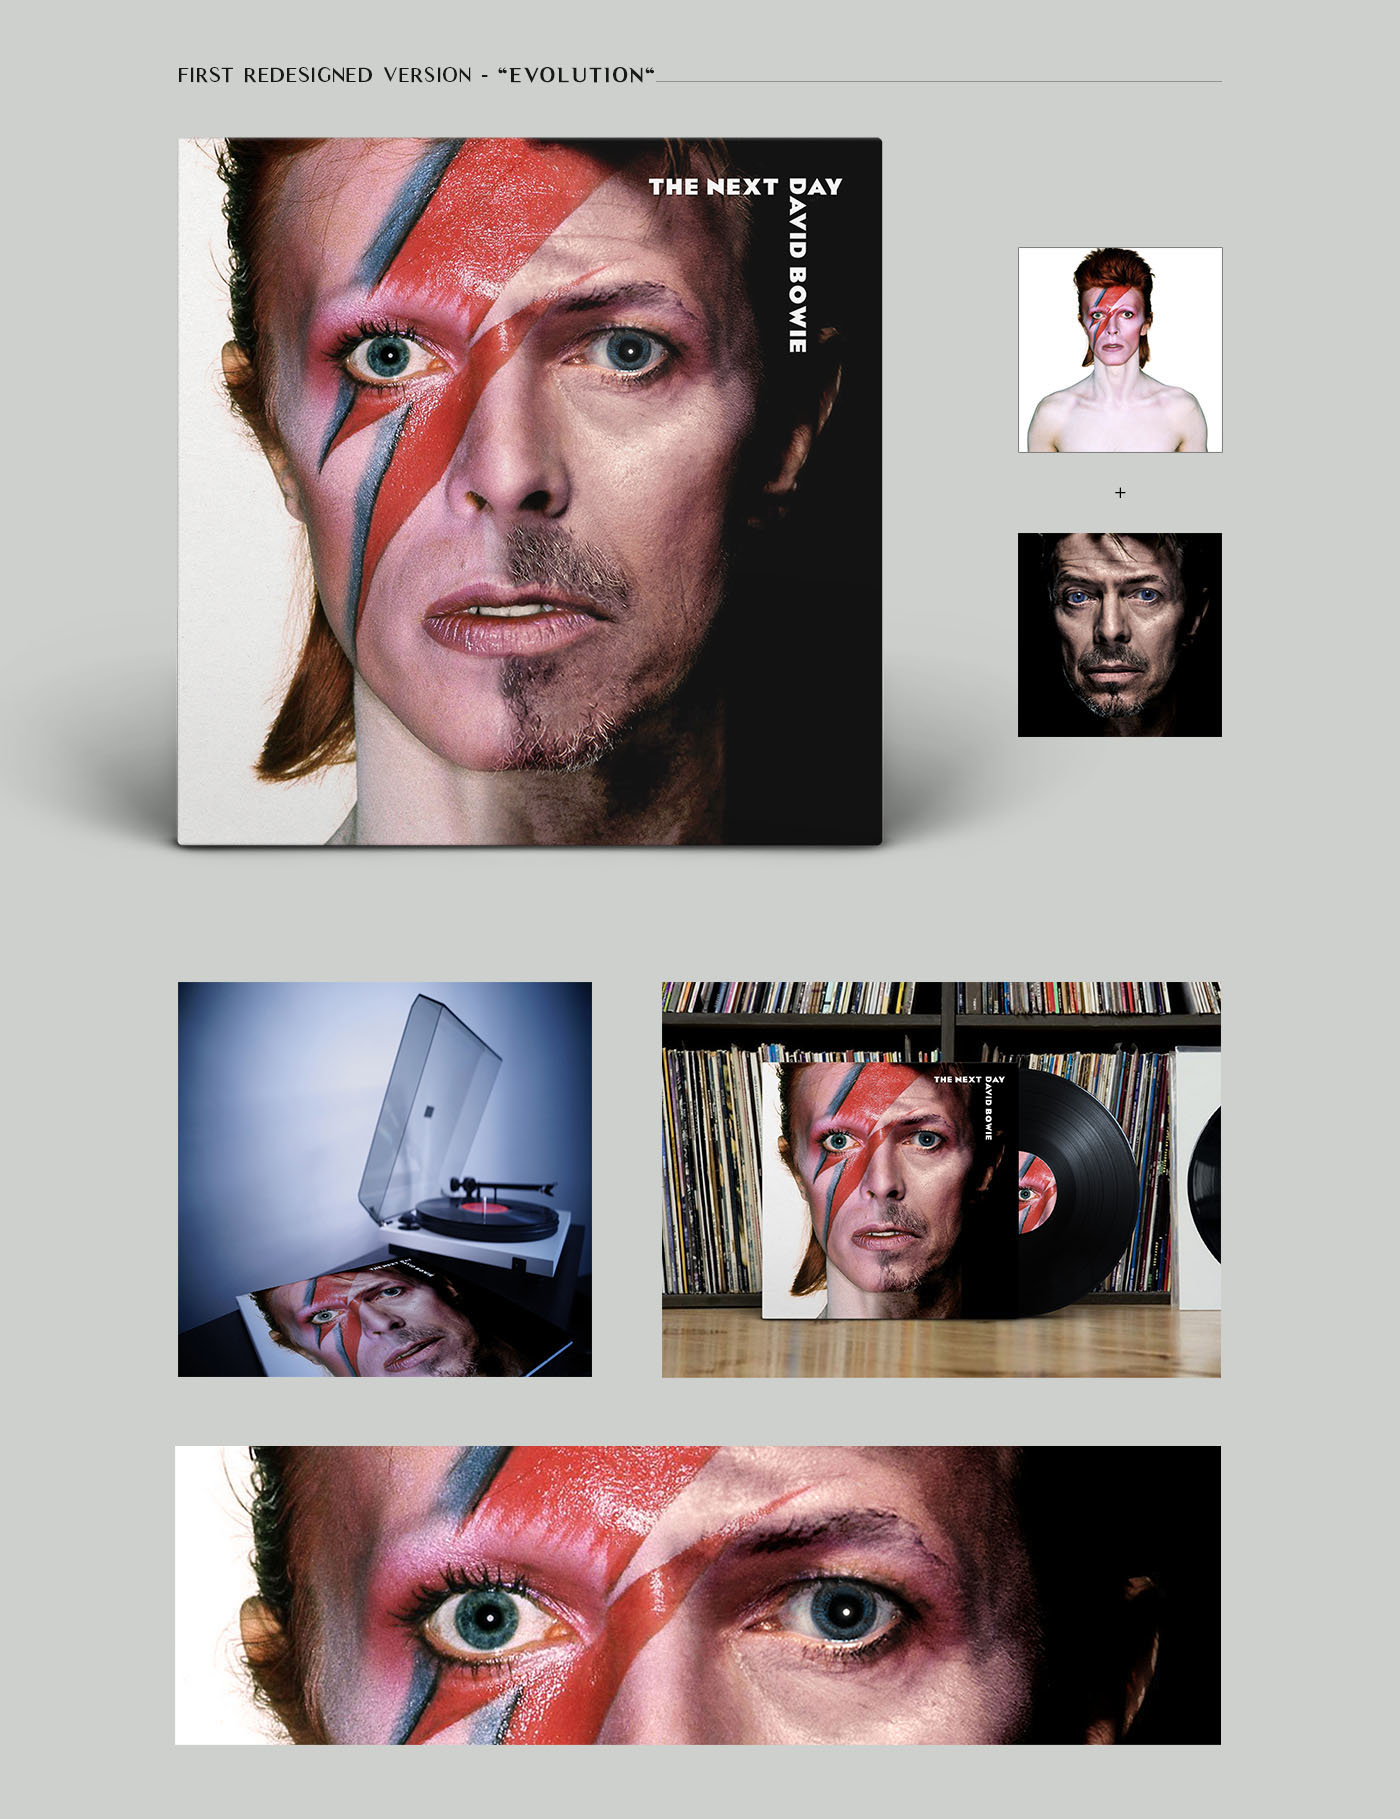 david bowie album cover redesign the next day Vinyl Album Cover cover design graphic design  Fine Arts Bologna music album design Creative Design Bowie Death Anniversary